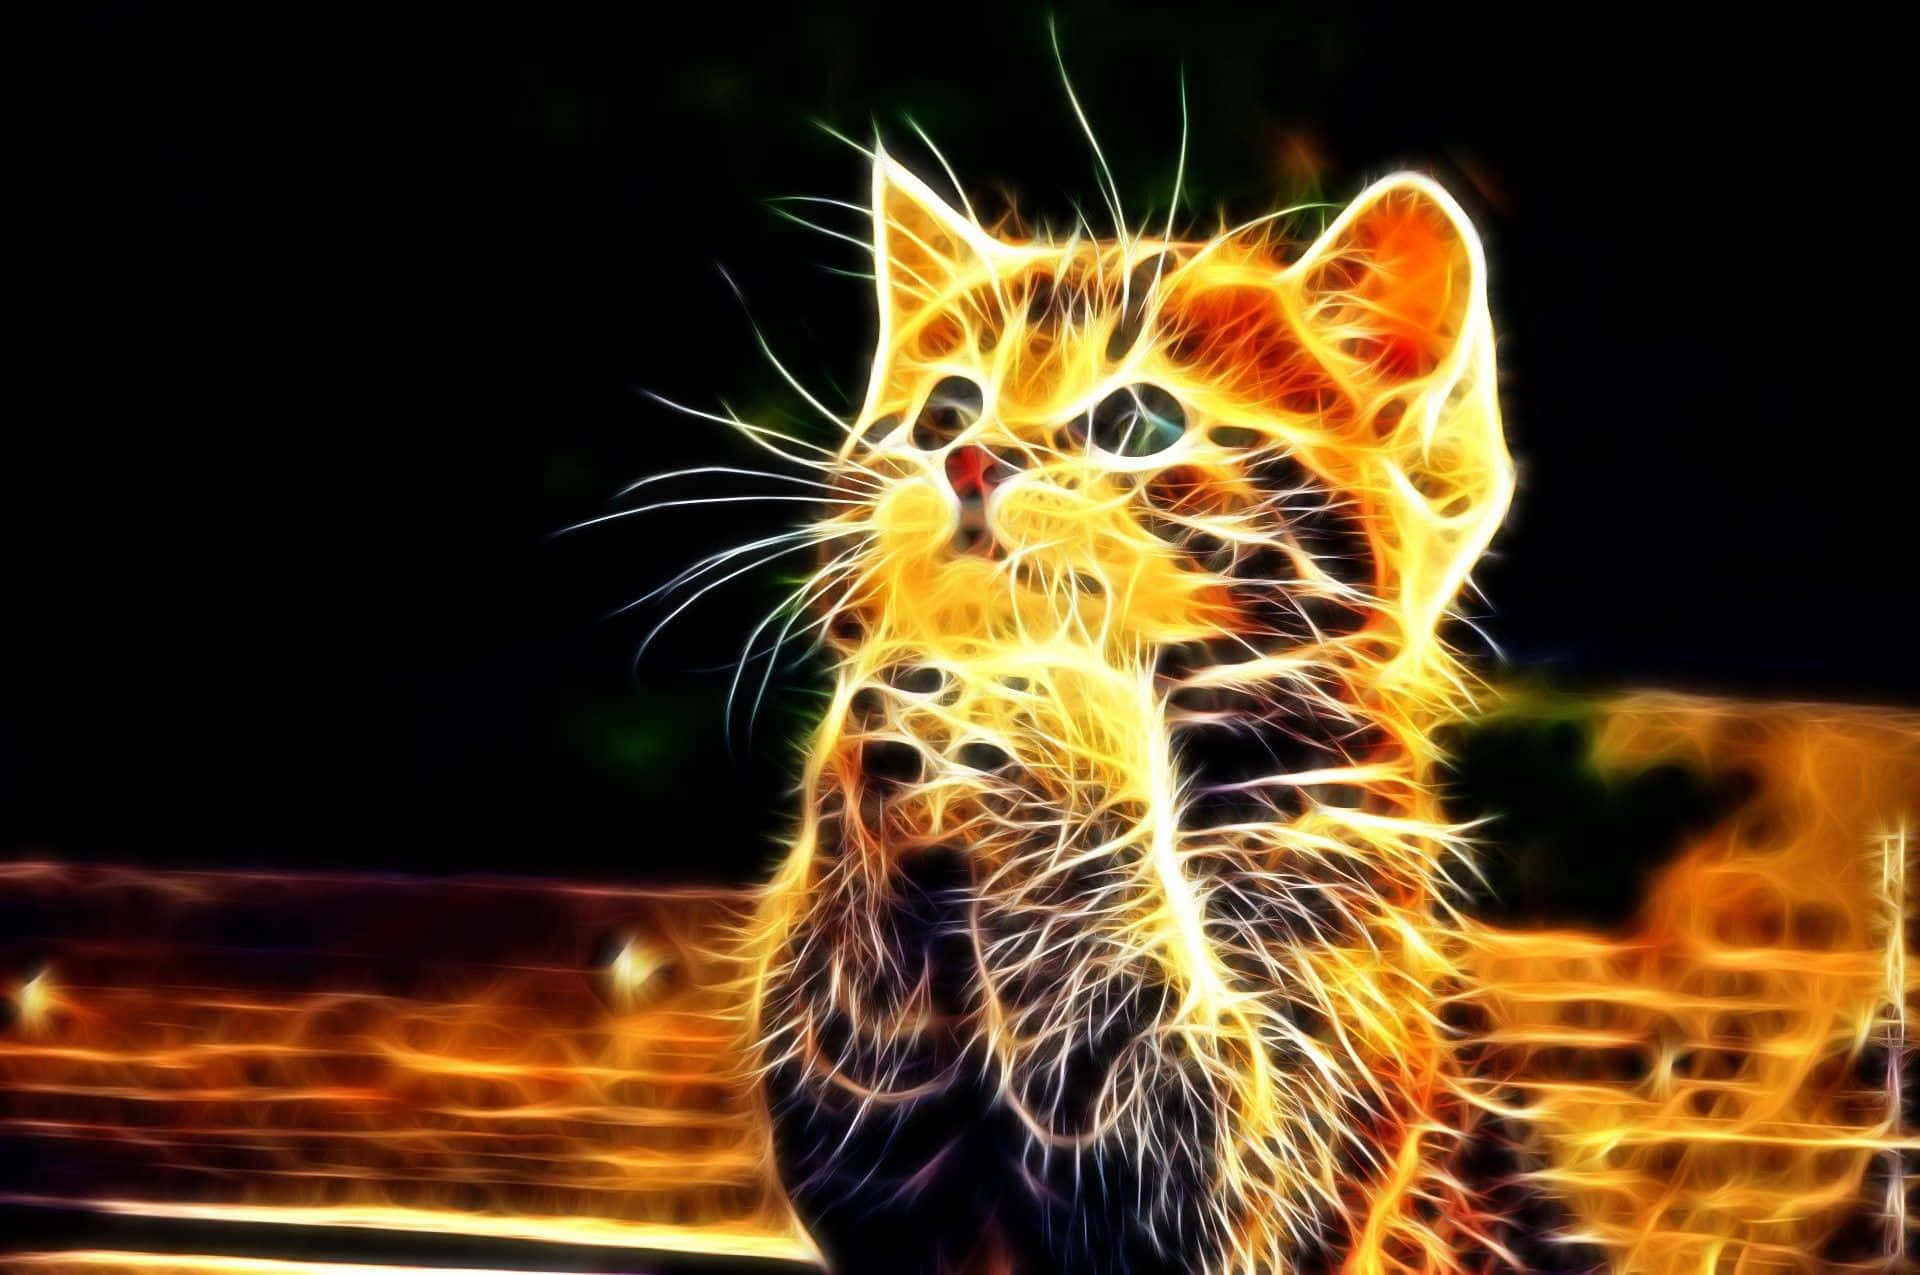 Süßesneonfarbenes Tier: Betende Katze. Wallpaper